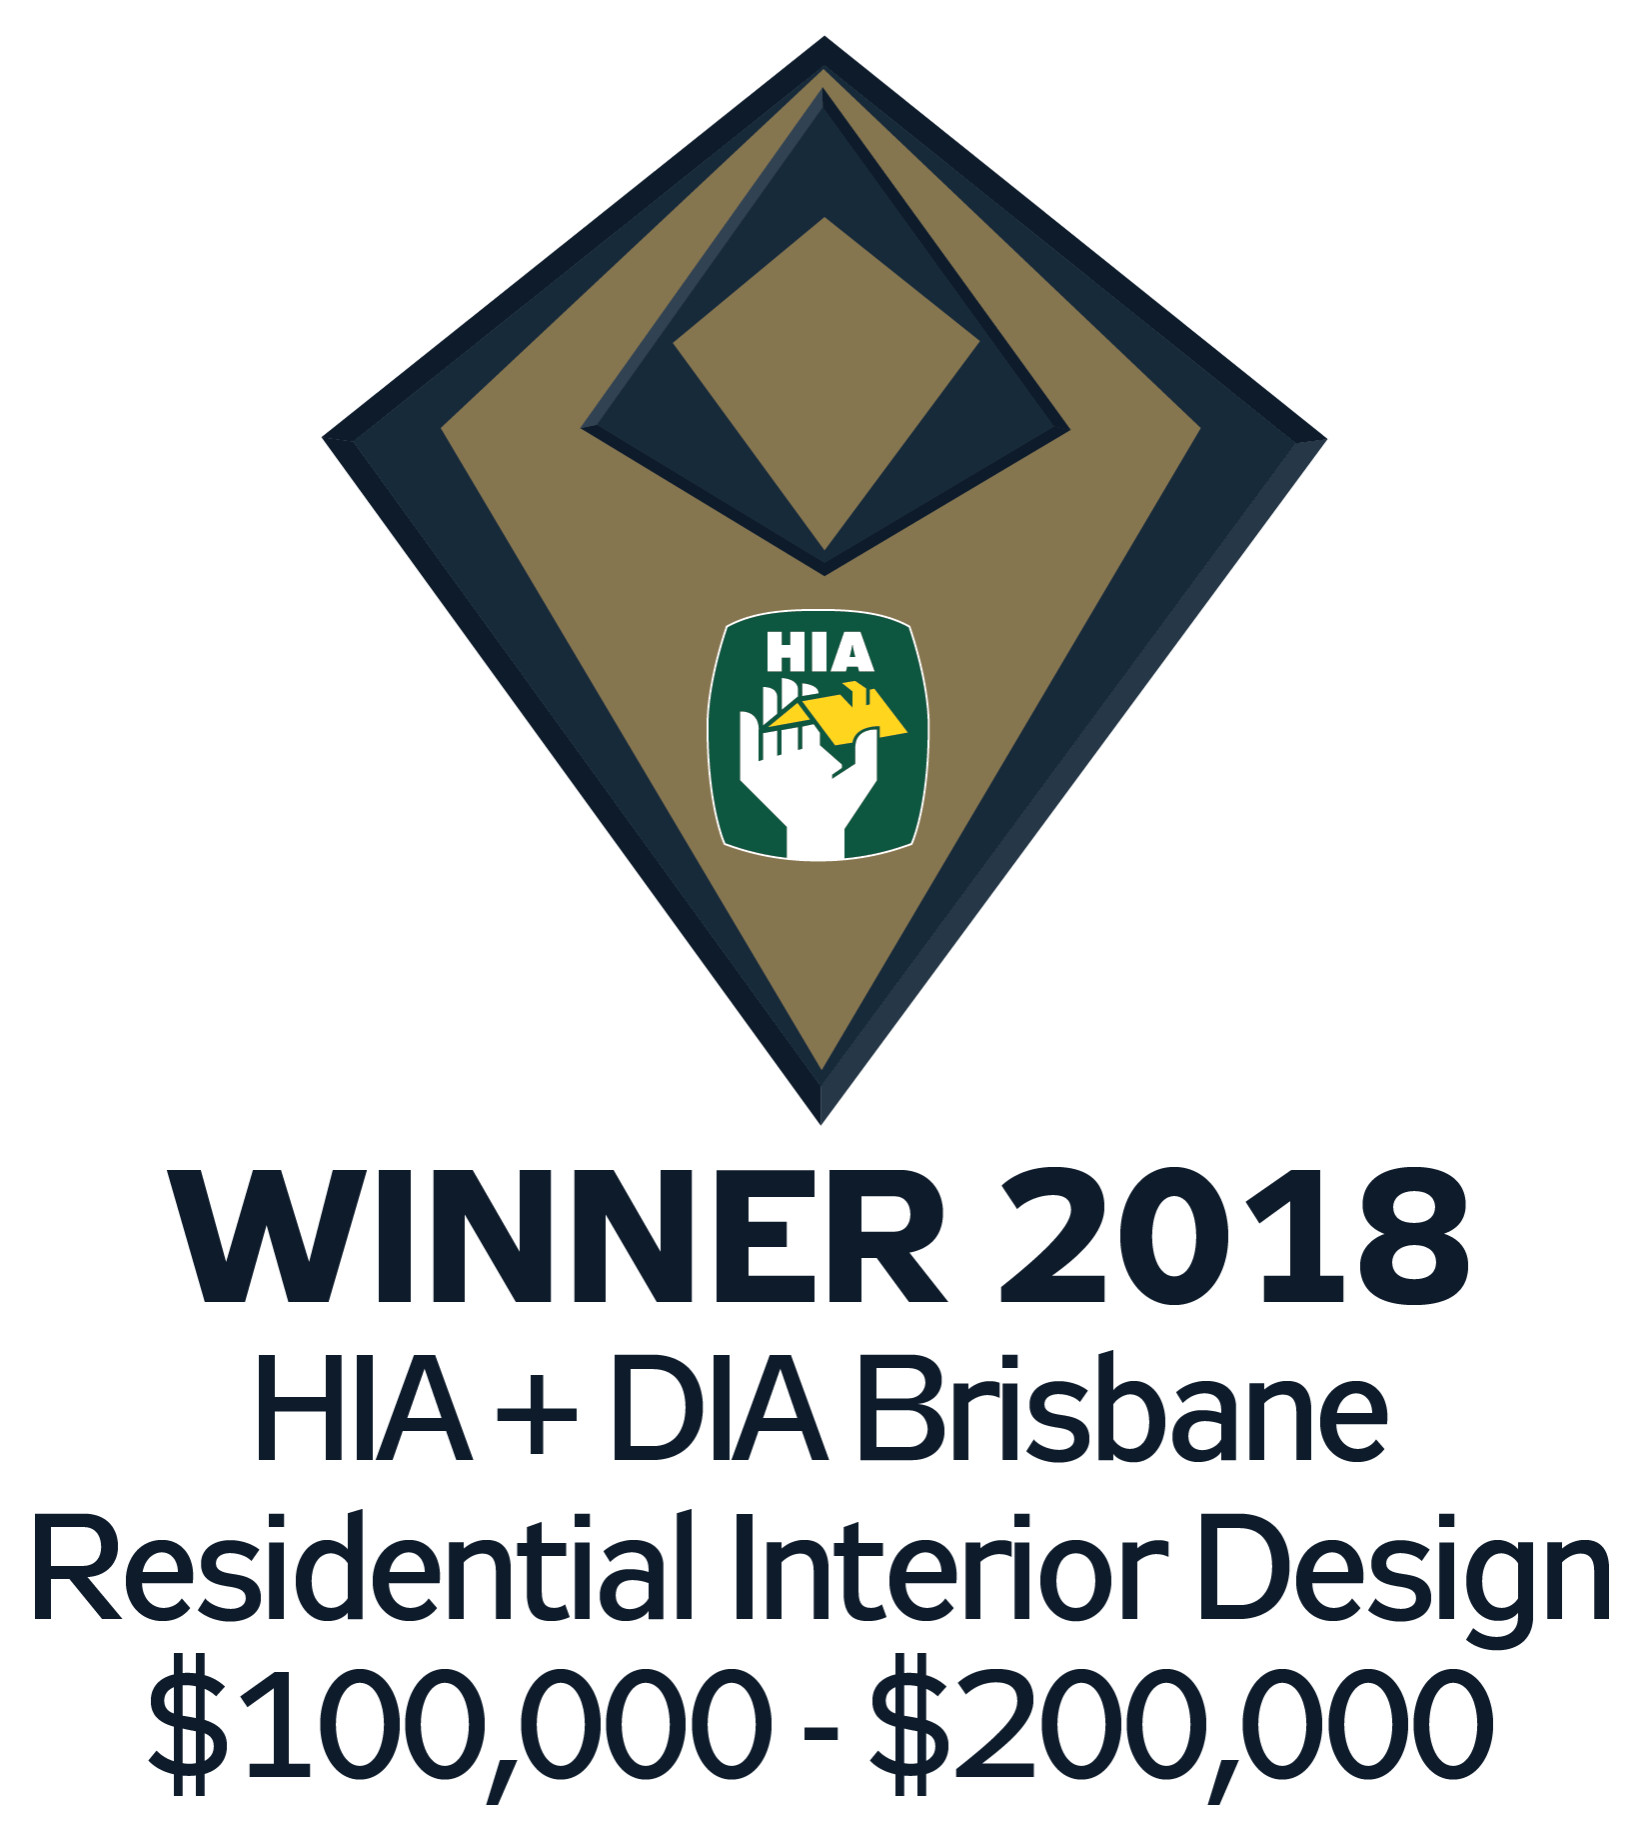 Winner 2018 HIA + DIA Brisbane Residential Interior Design $100,000 - $200,000